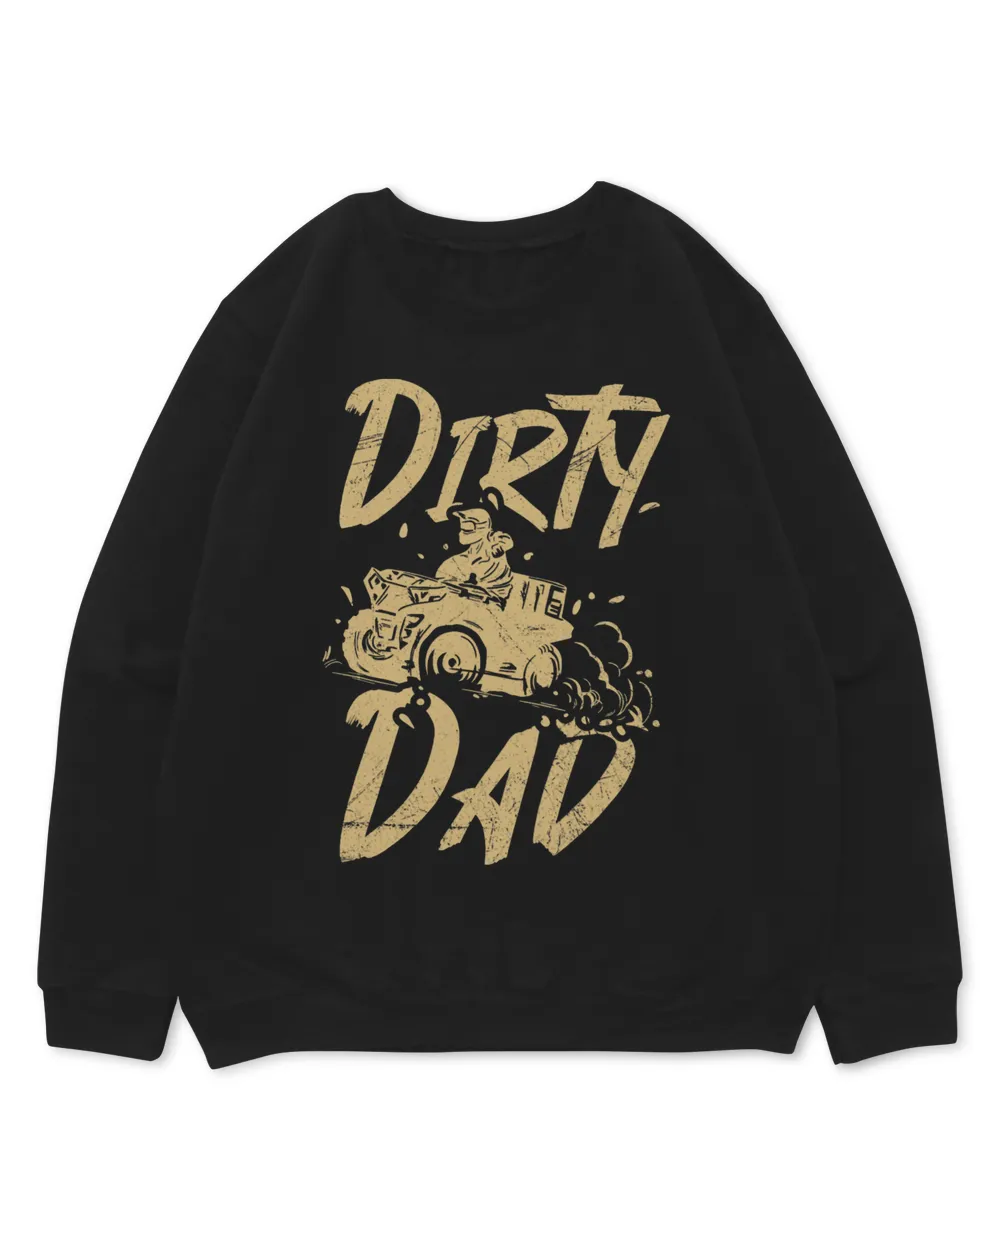 Mens Dirty dad Design for your Quad Dad